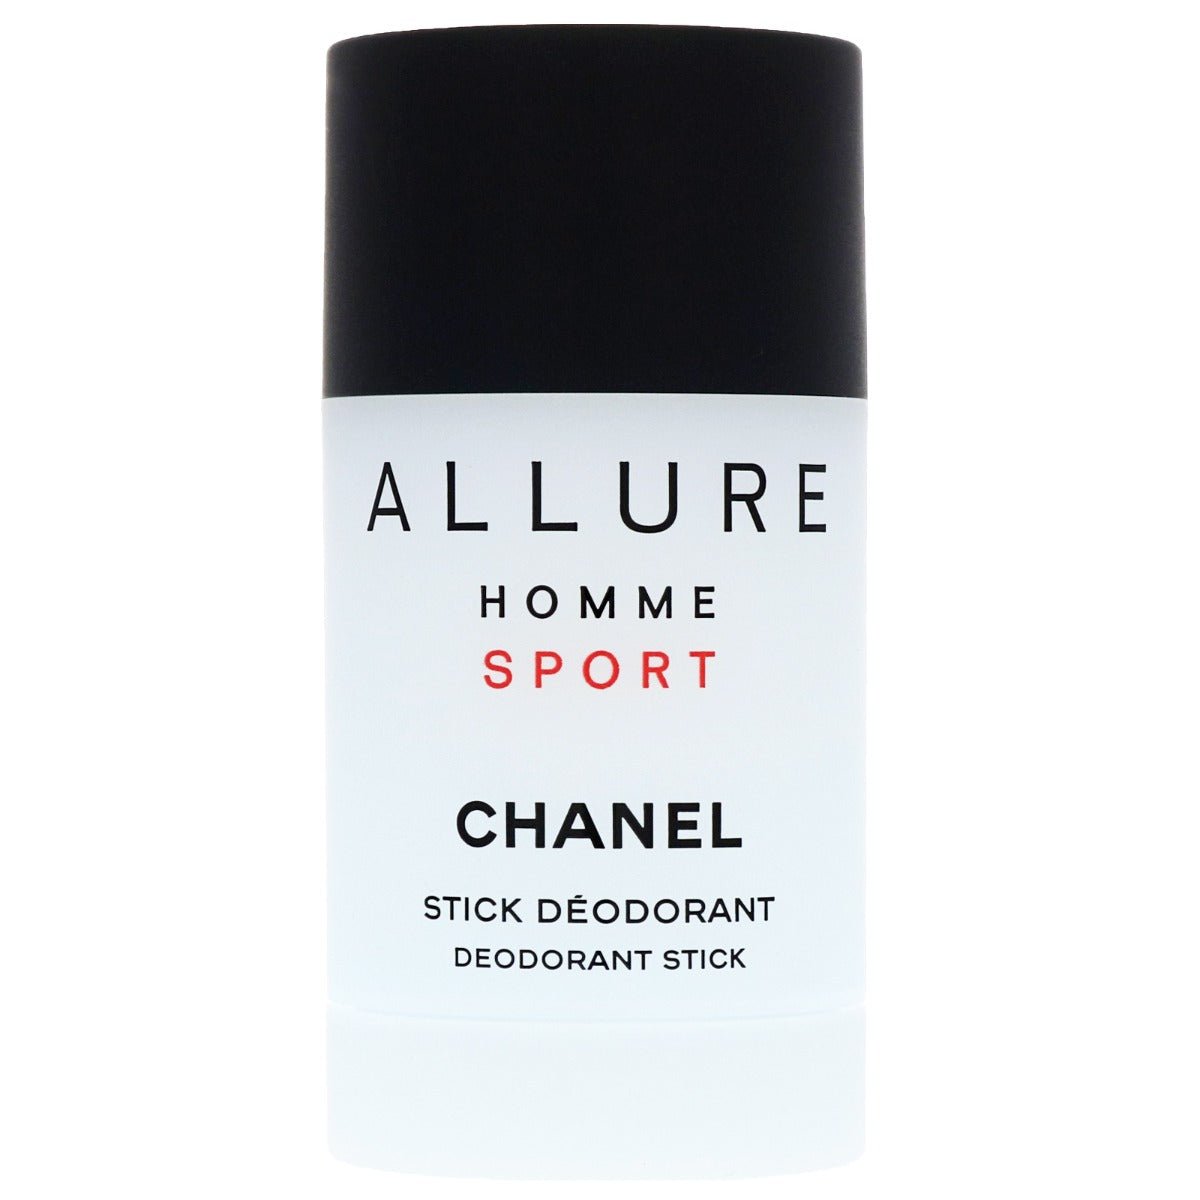 Chanel Allure Homme Sport Deodorant Stick 75Ml - AllurebeautypkChanel Allure Homme Sport Deodorant Stick 75Ml